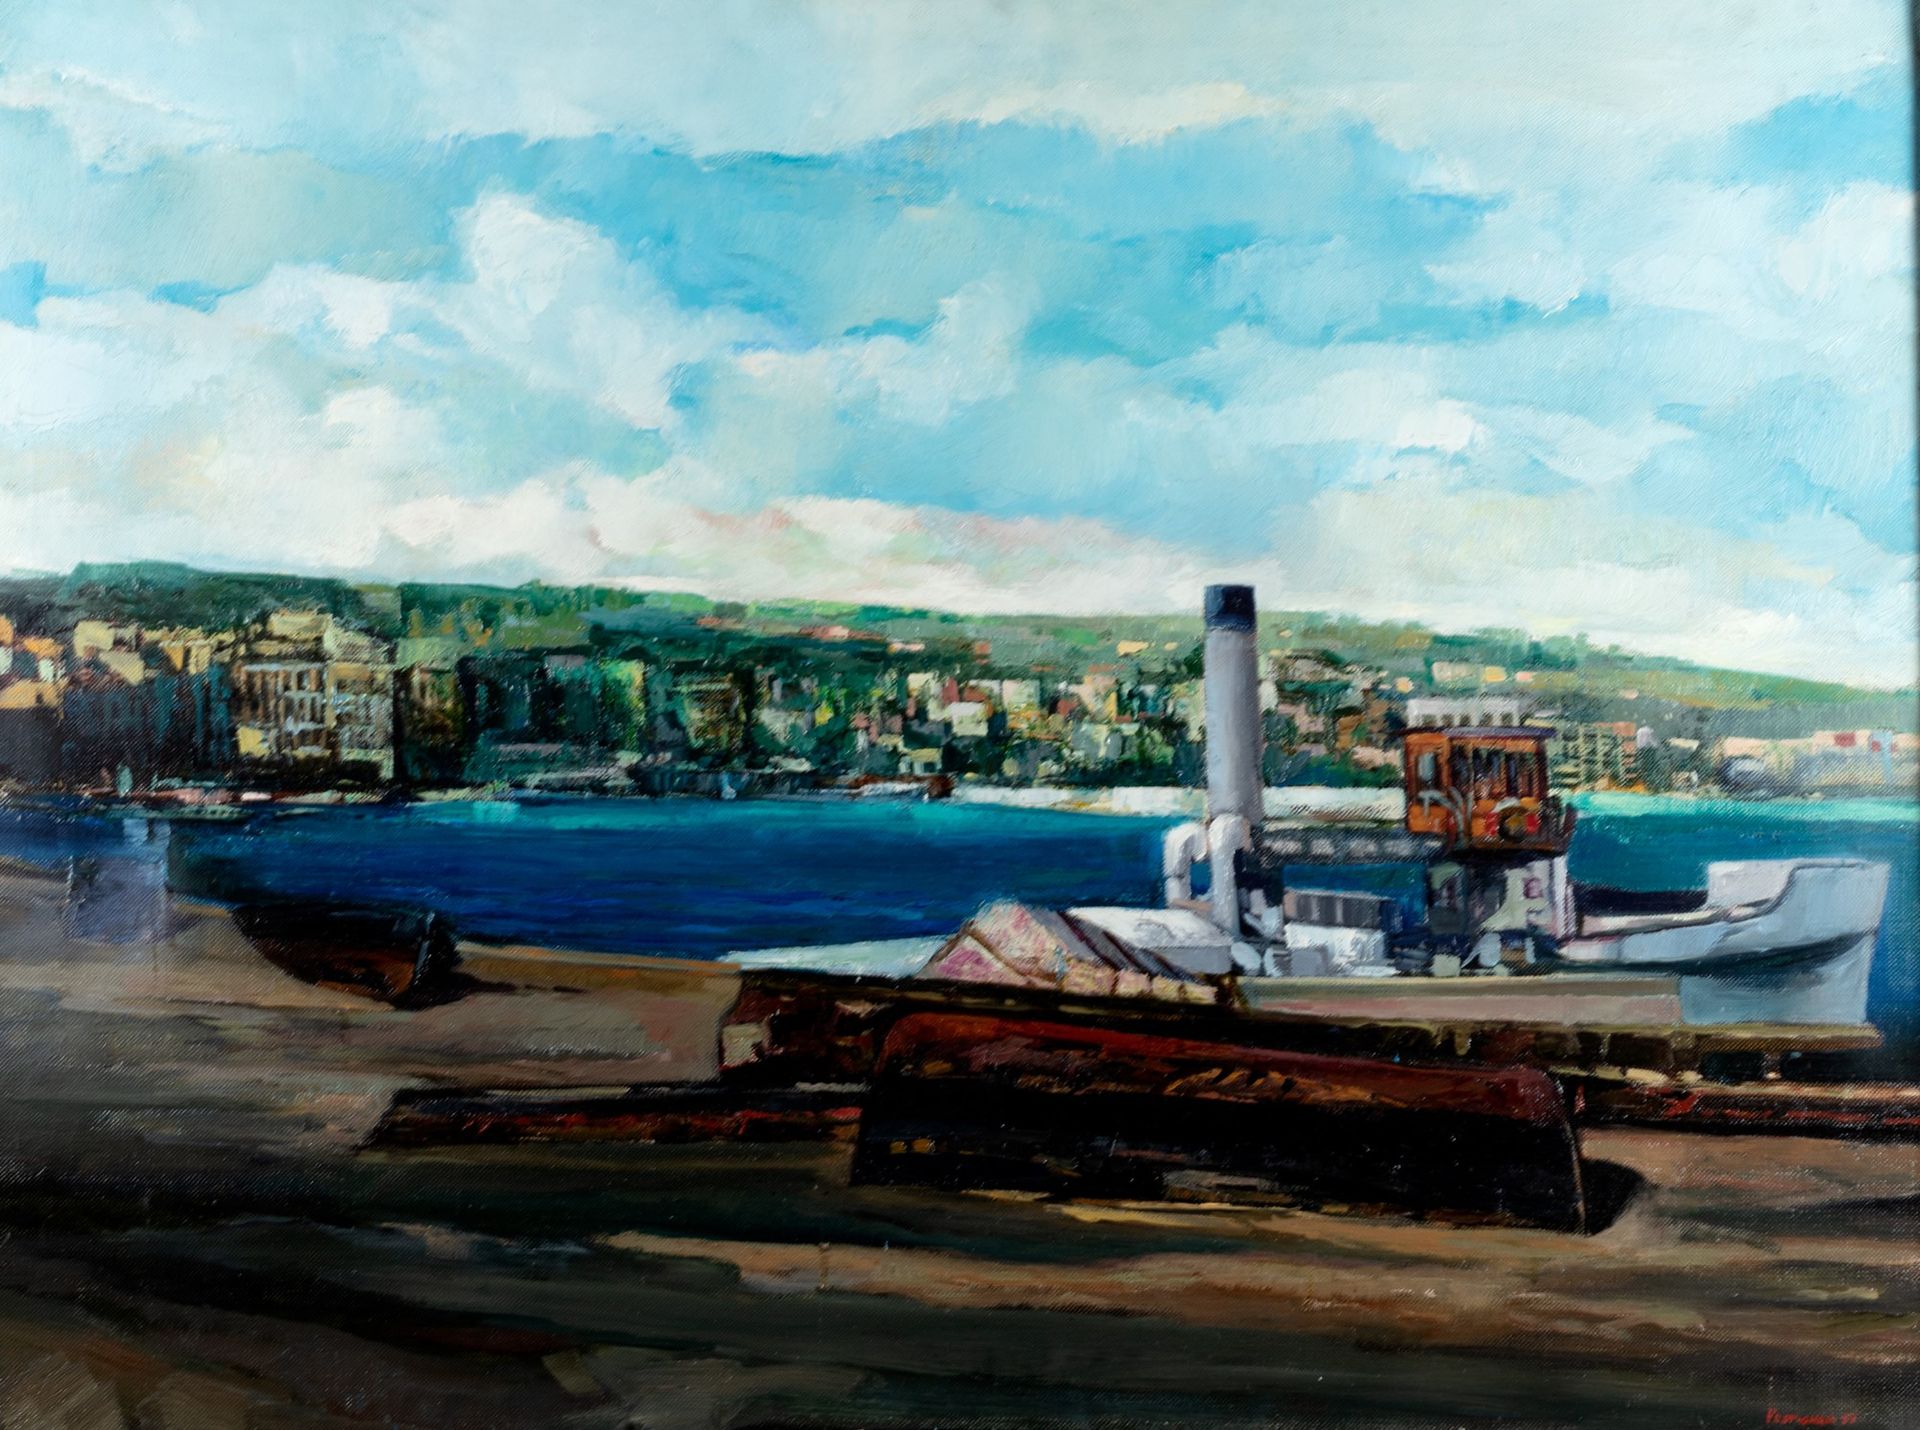 RENZO VESPIGNANI 有船的风景，1956年

油画
75 x 100 cm
右下角签名：Vespignani 56
本拍品受艺术家转售权的限制